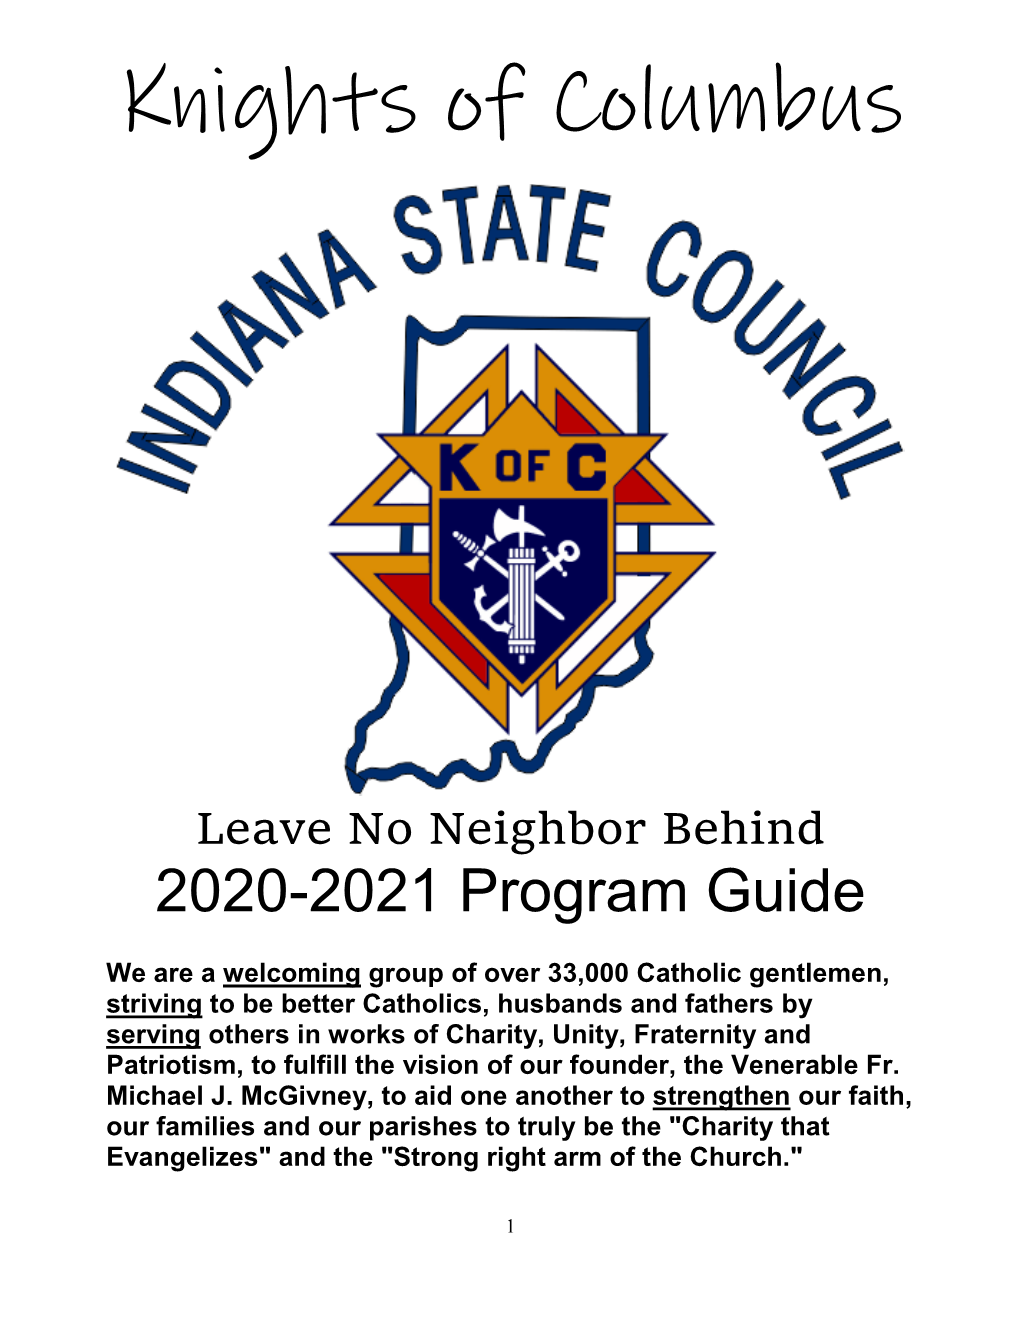 2017-2018 State Program Guide